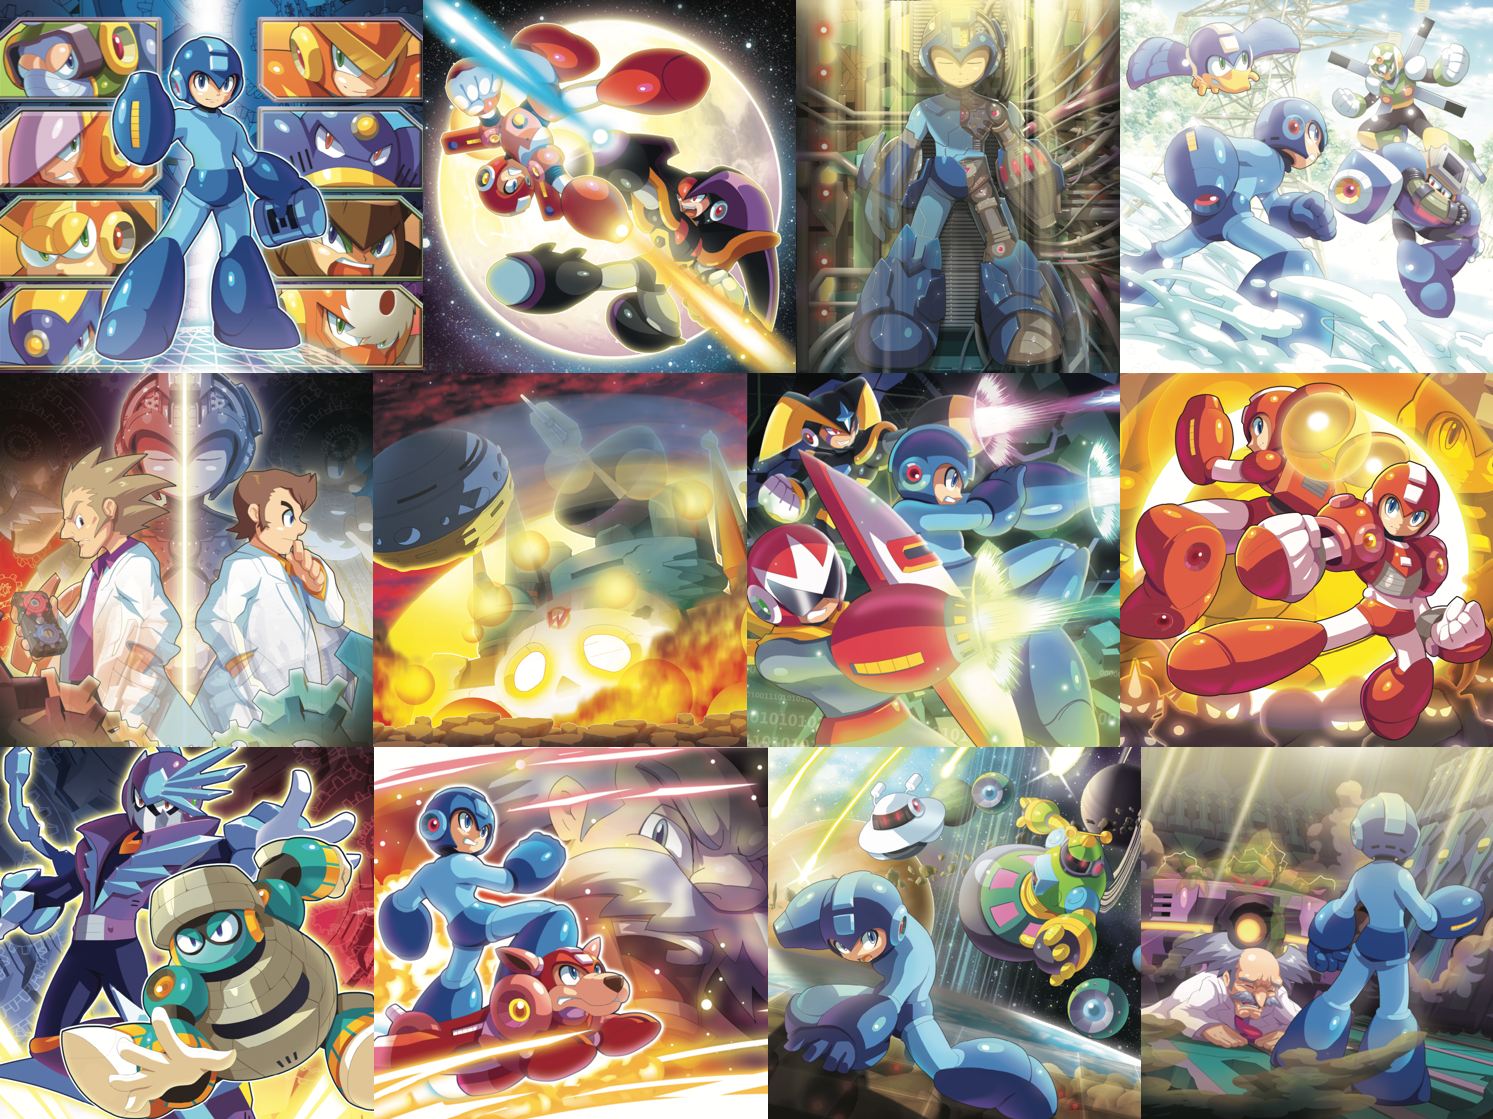 Art by ultimatemaverickx for the Mega Man vinyl collection